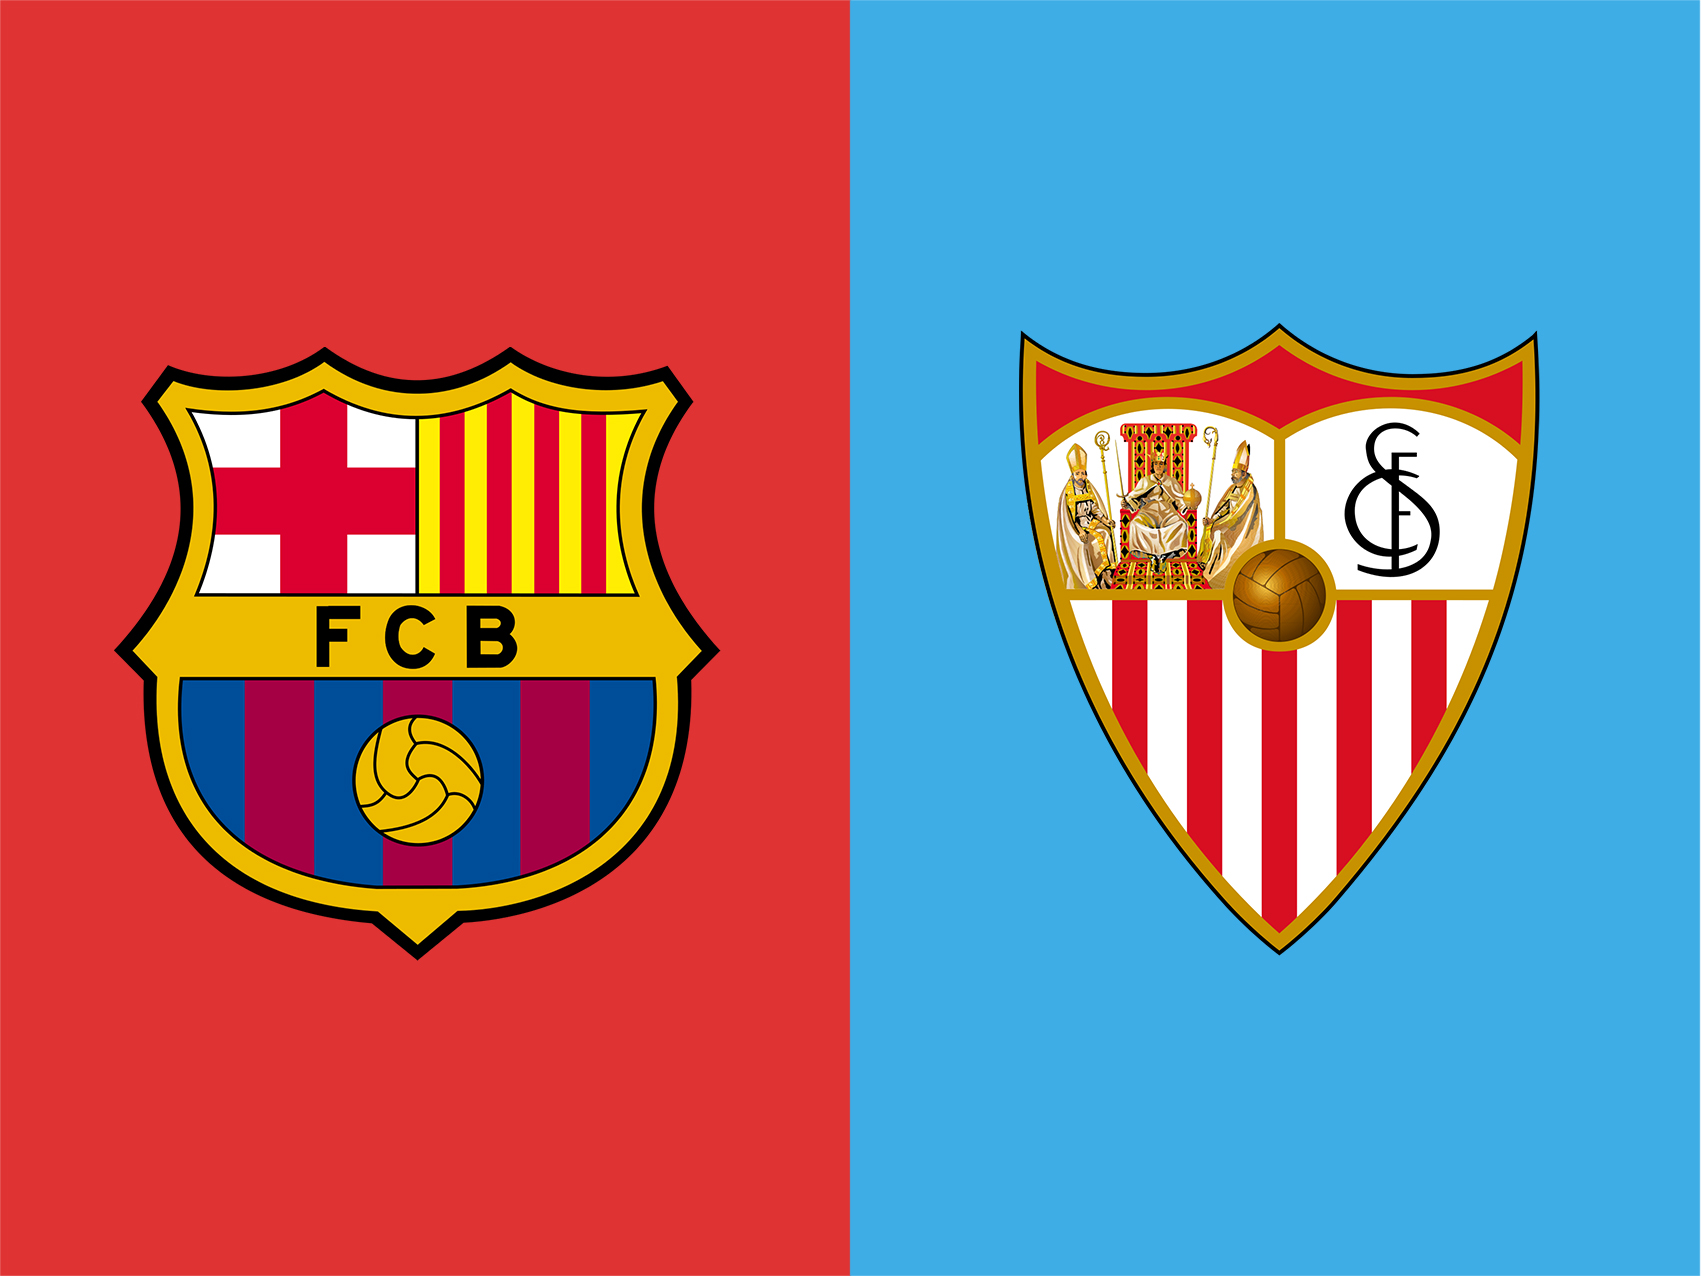 soi-keo-ca-cuoc-bong-da-ngay-6-10-Barcelona-vs-Sevilla-tu-dia-cho-khach-b9 1